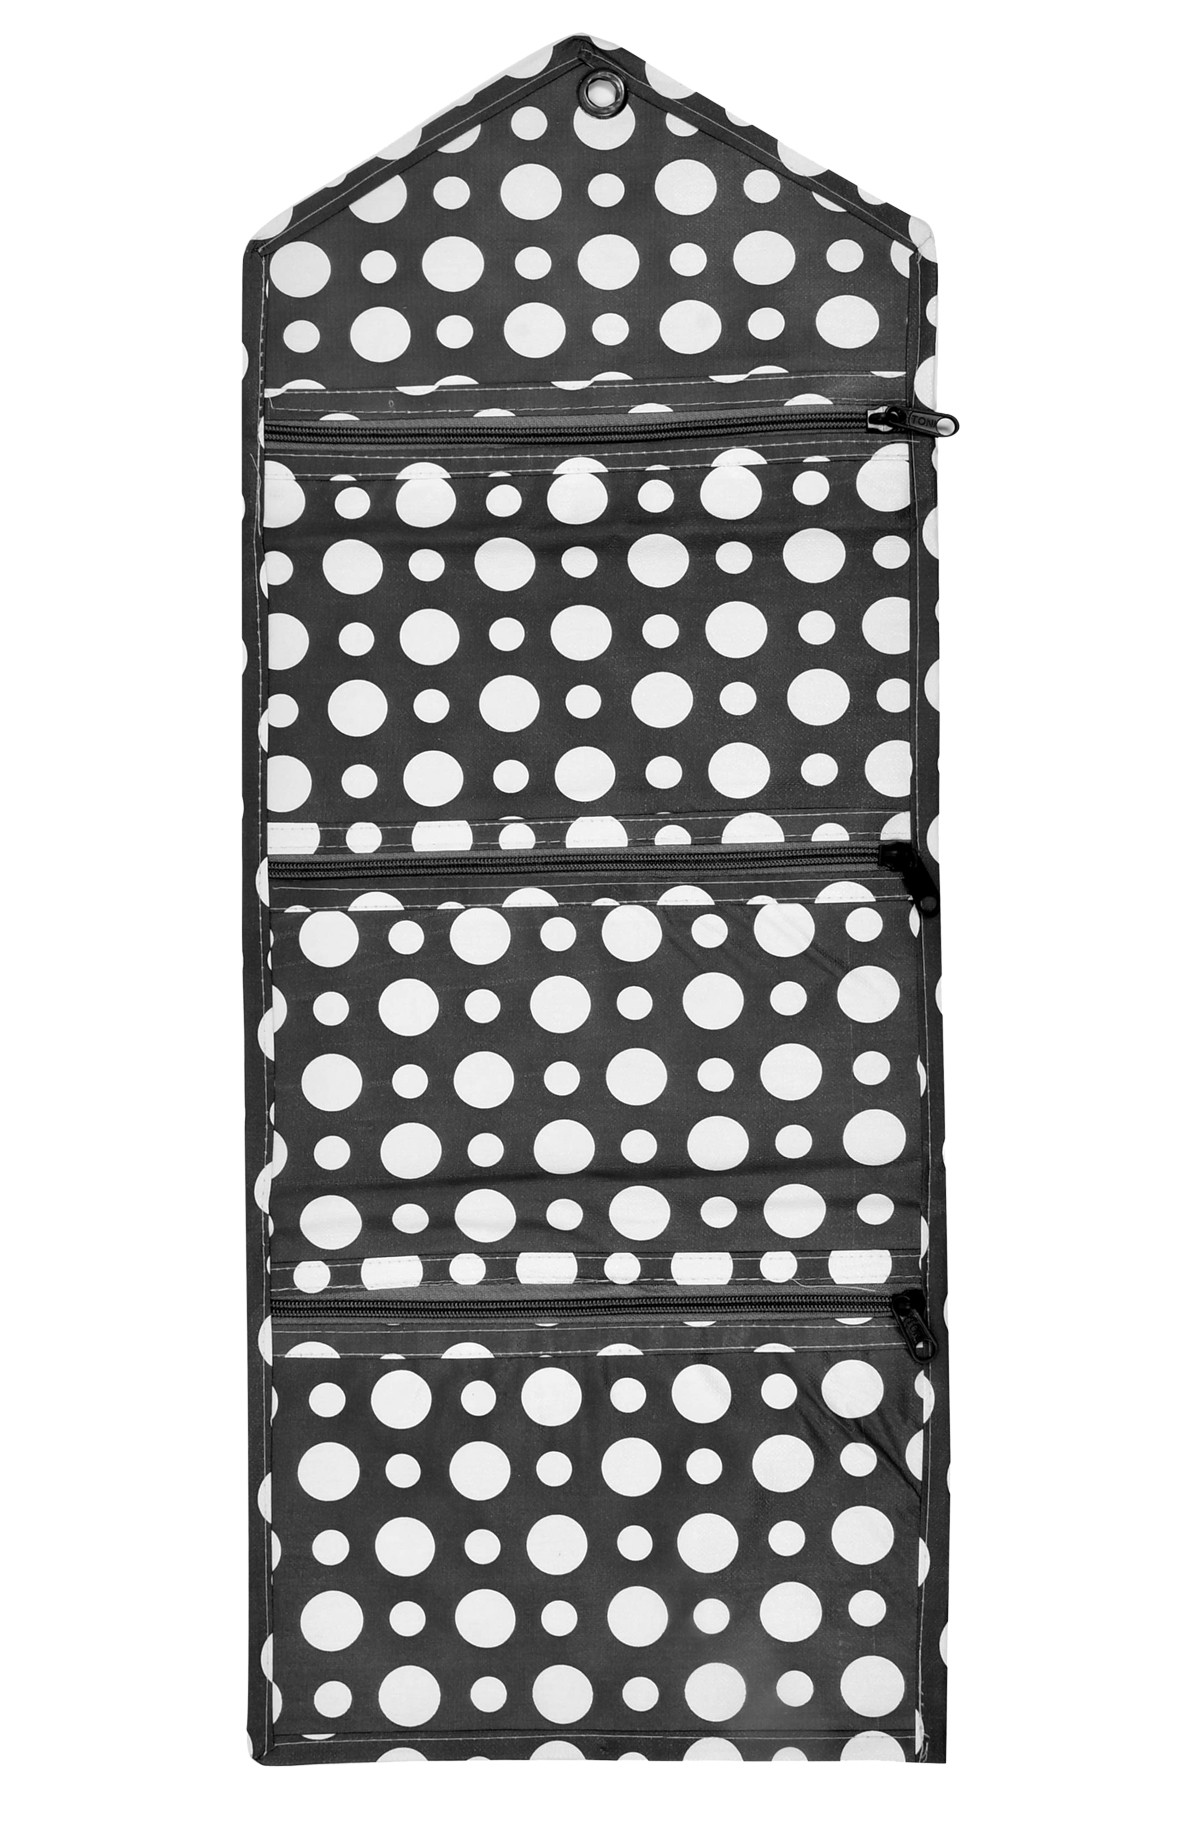 Kuber Industries Dot Printed Wall Hanging Magazine Letter Holder/Organizer With 3 Zipper Pockets (Black & White)-HS43KUBMART25743